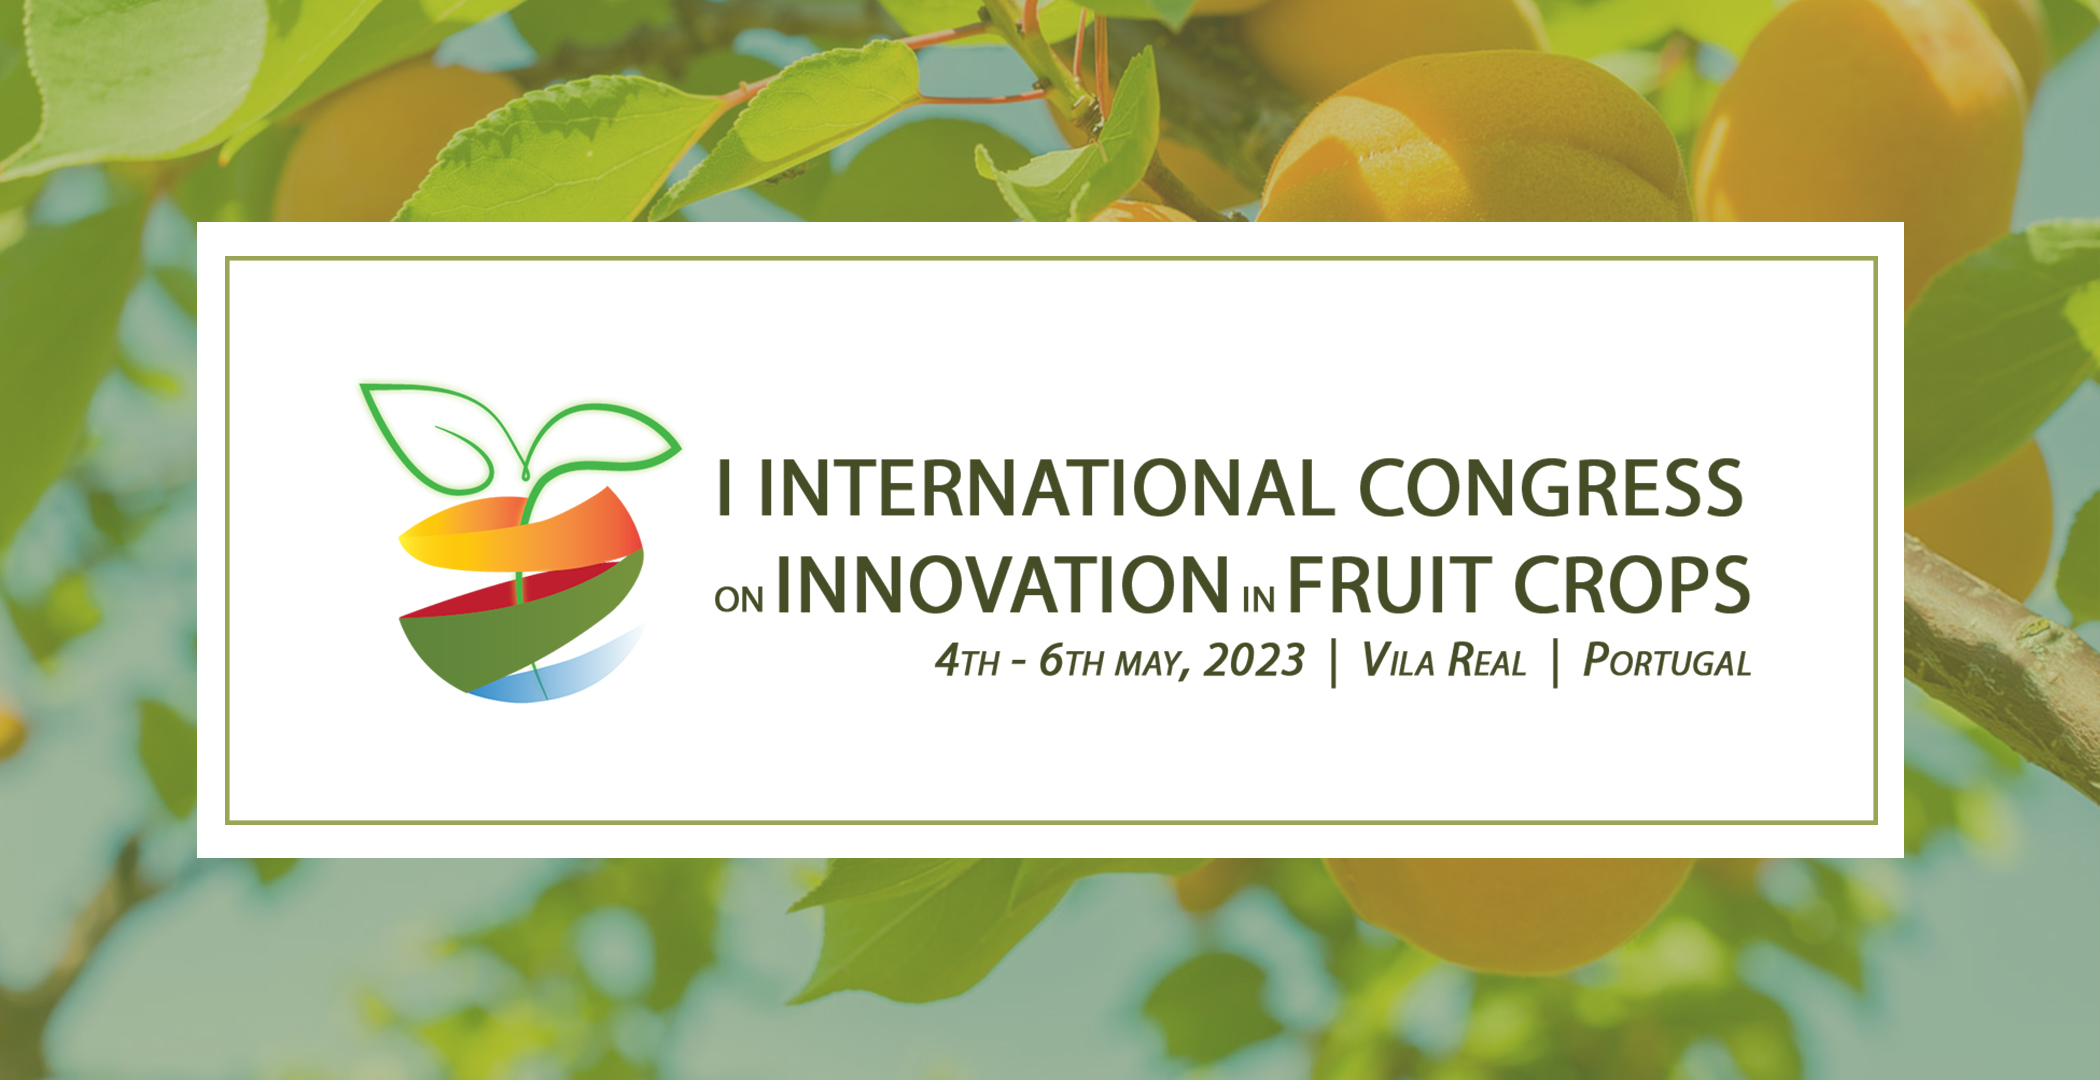 International Congress on Innovation in Fruit Crops